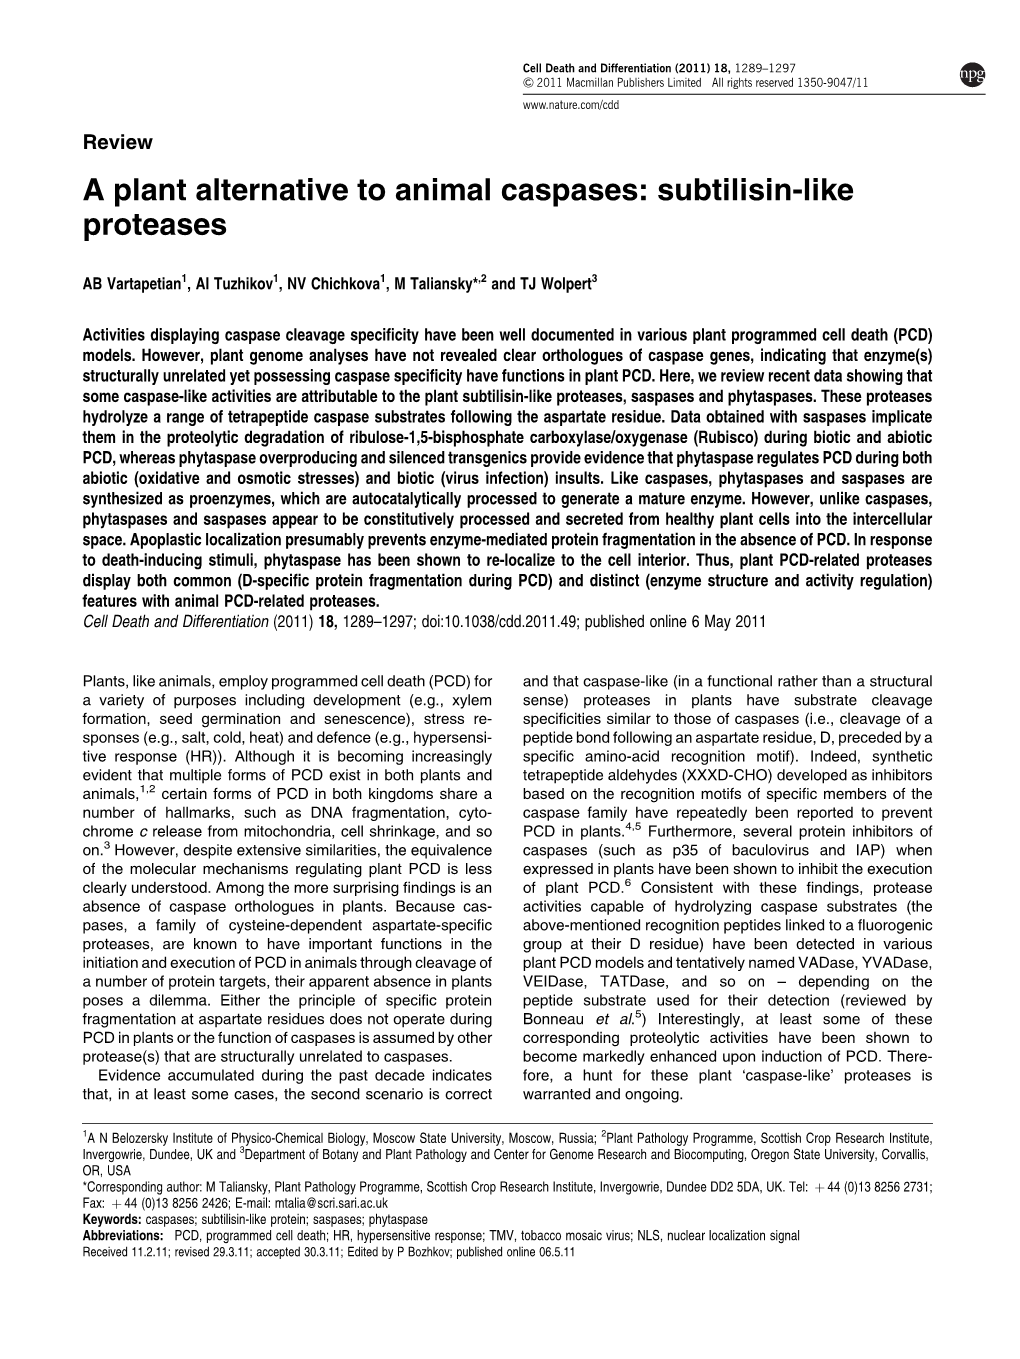 Subtilisin-Like Proteases